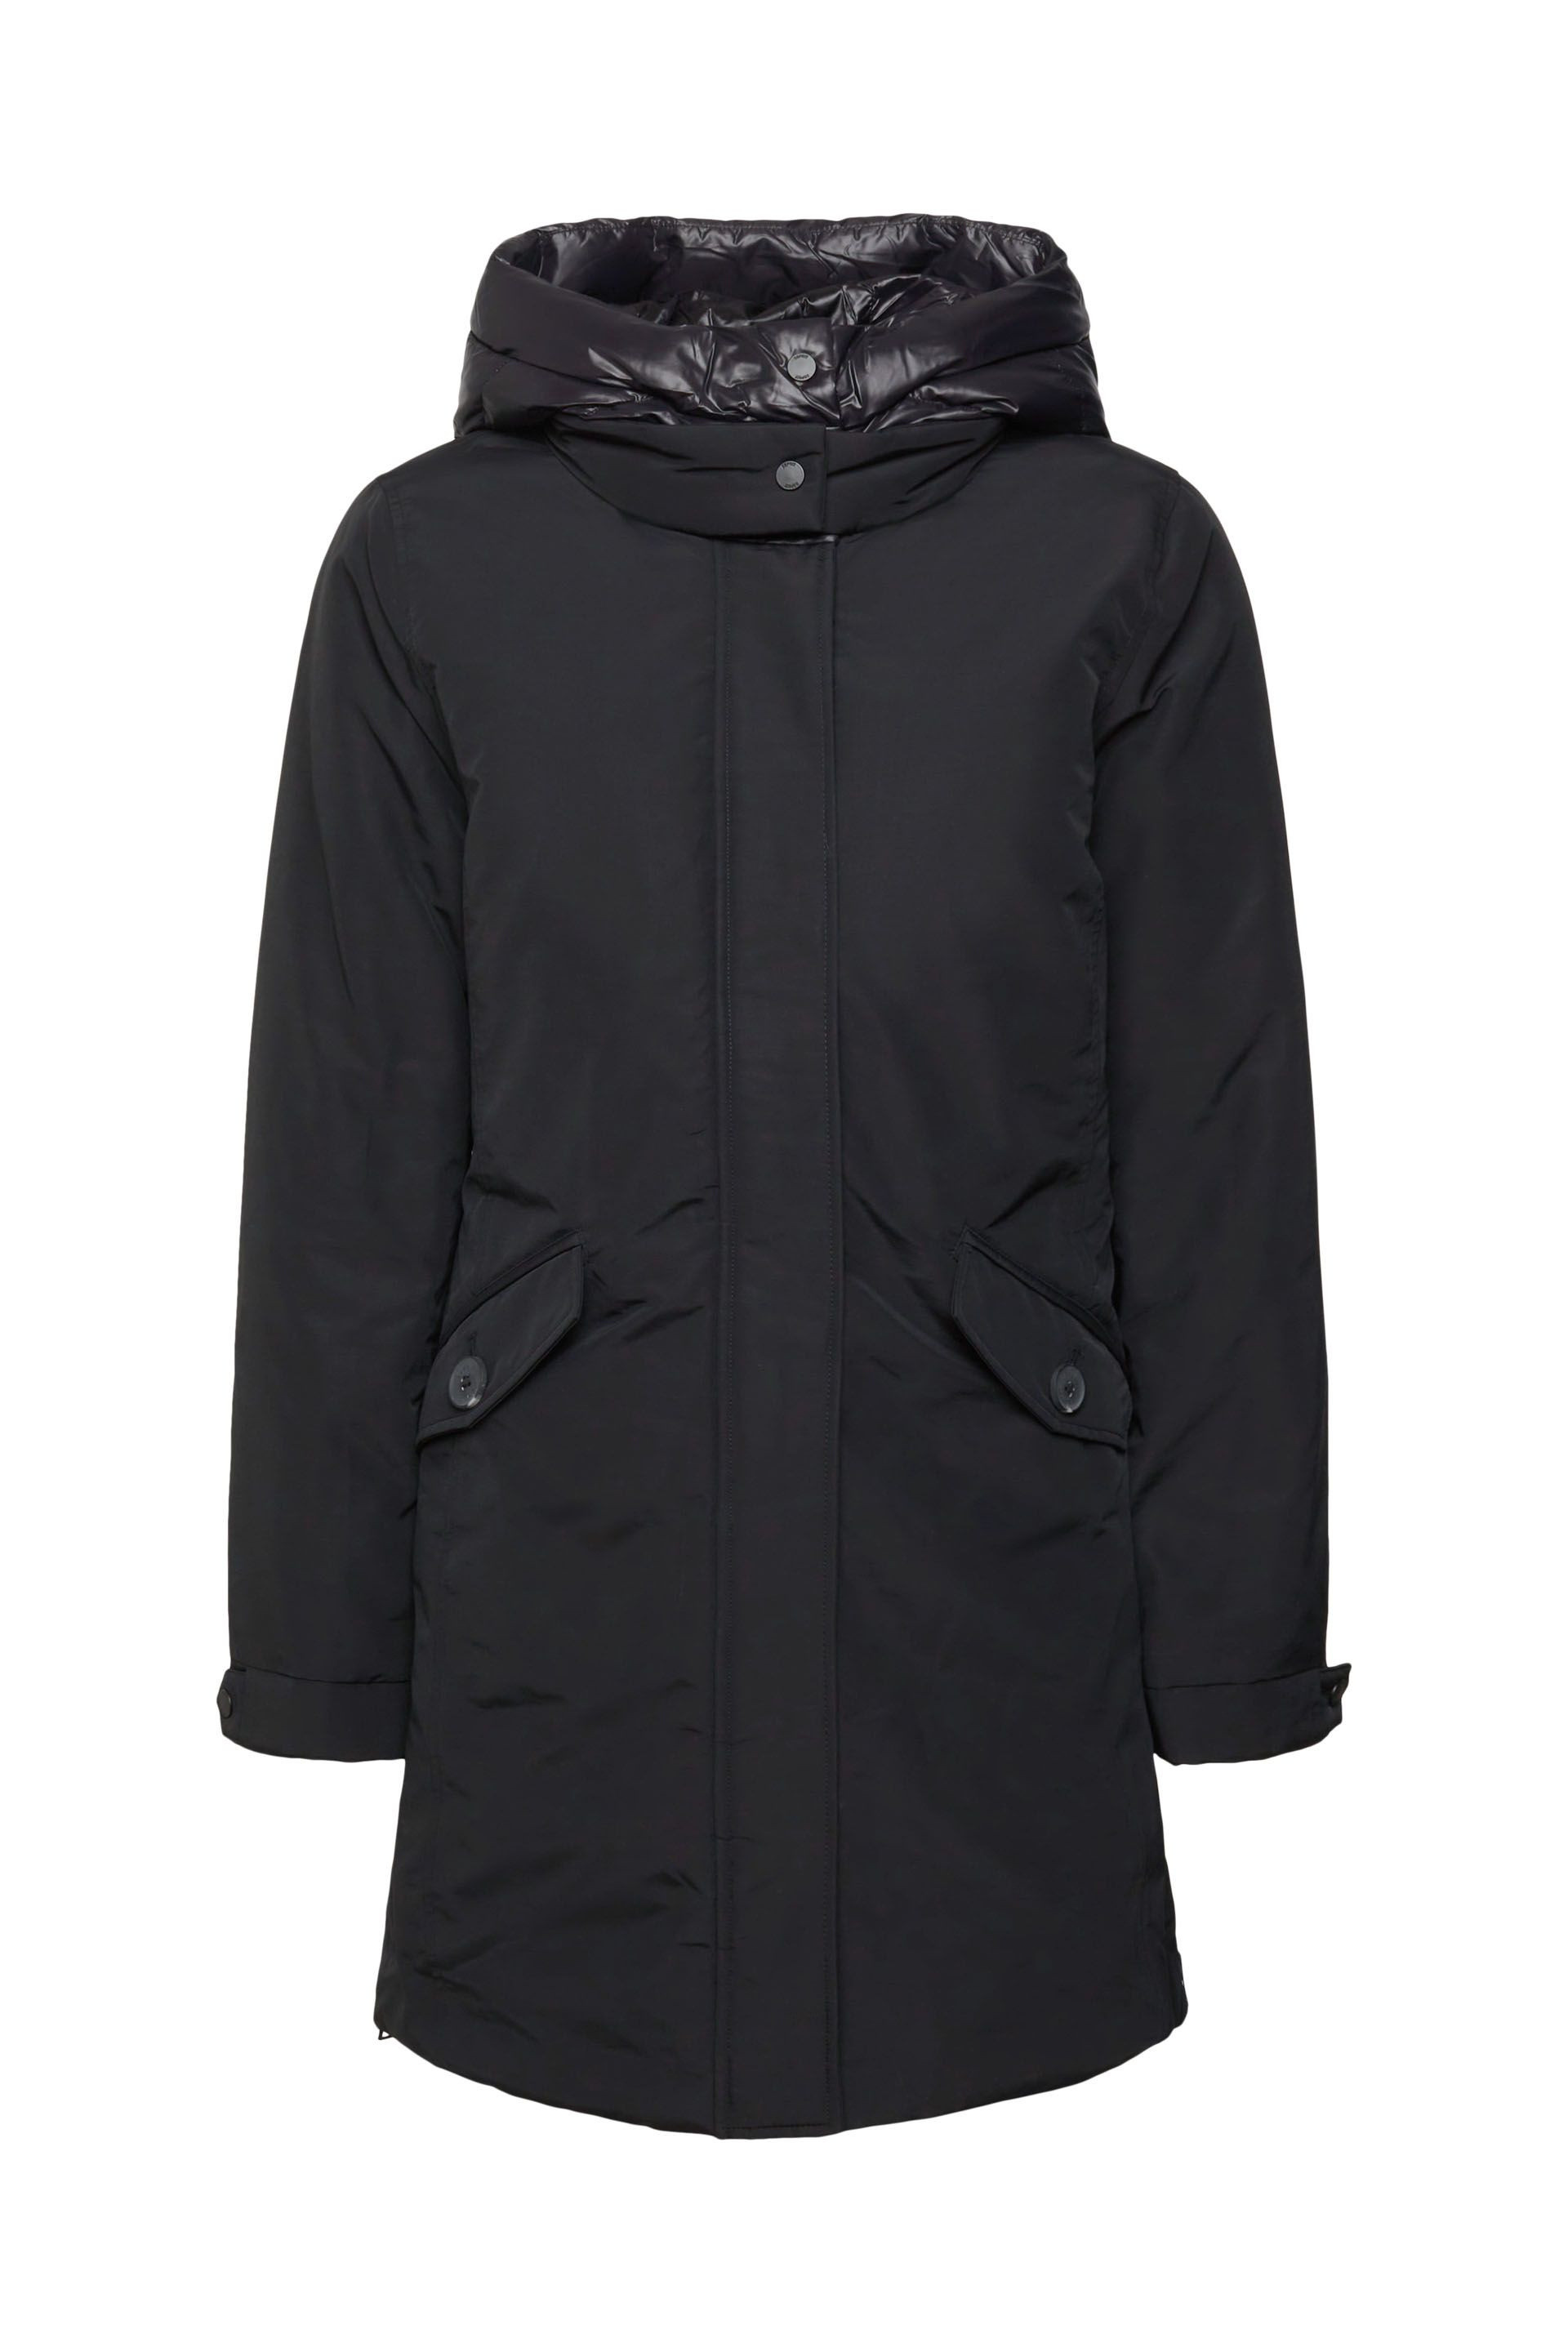 Hooded jacket with padding, Black, large image number 0